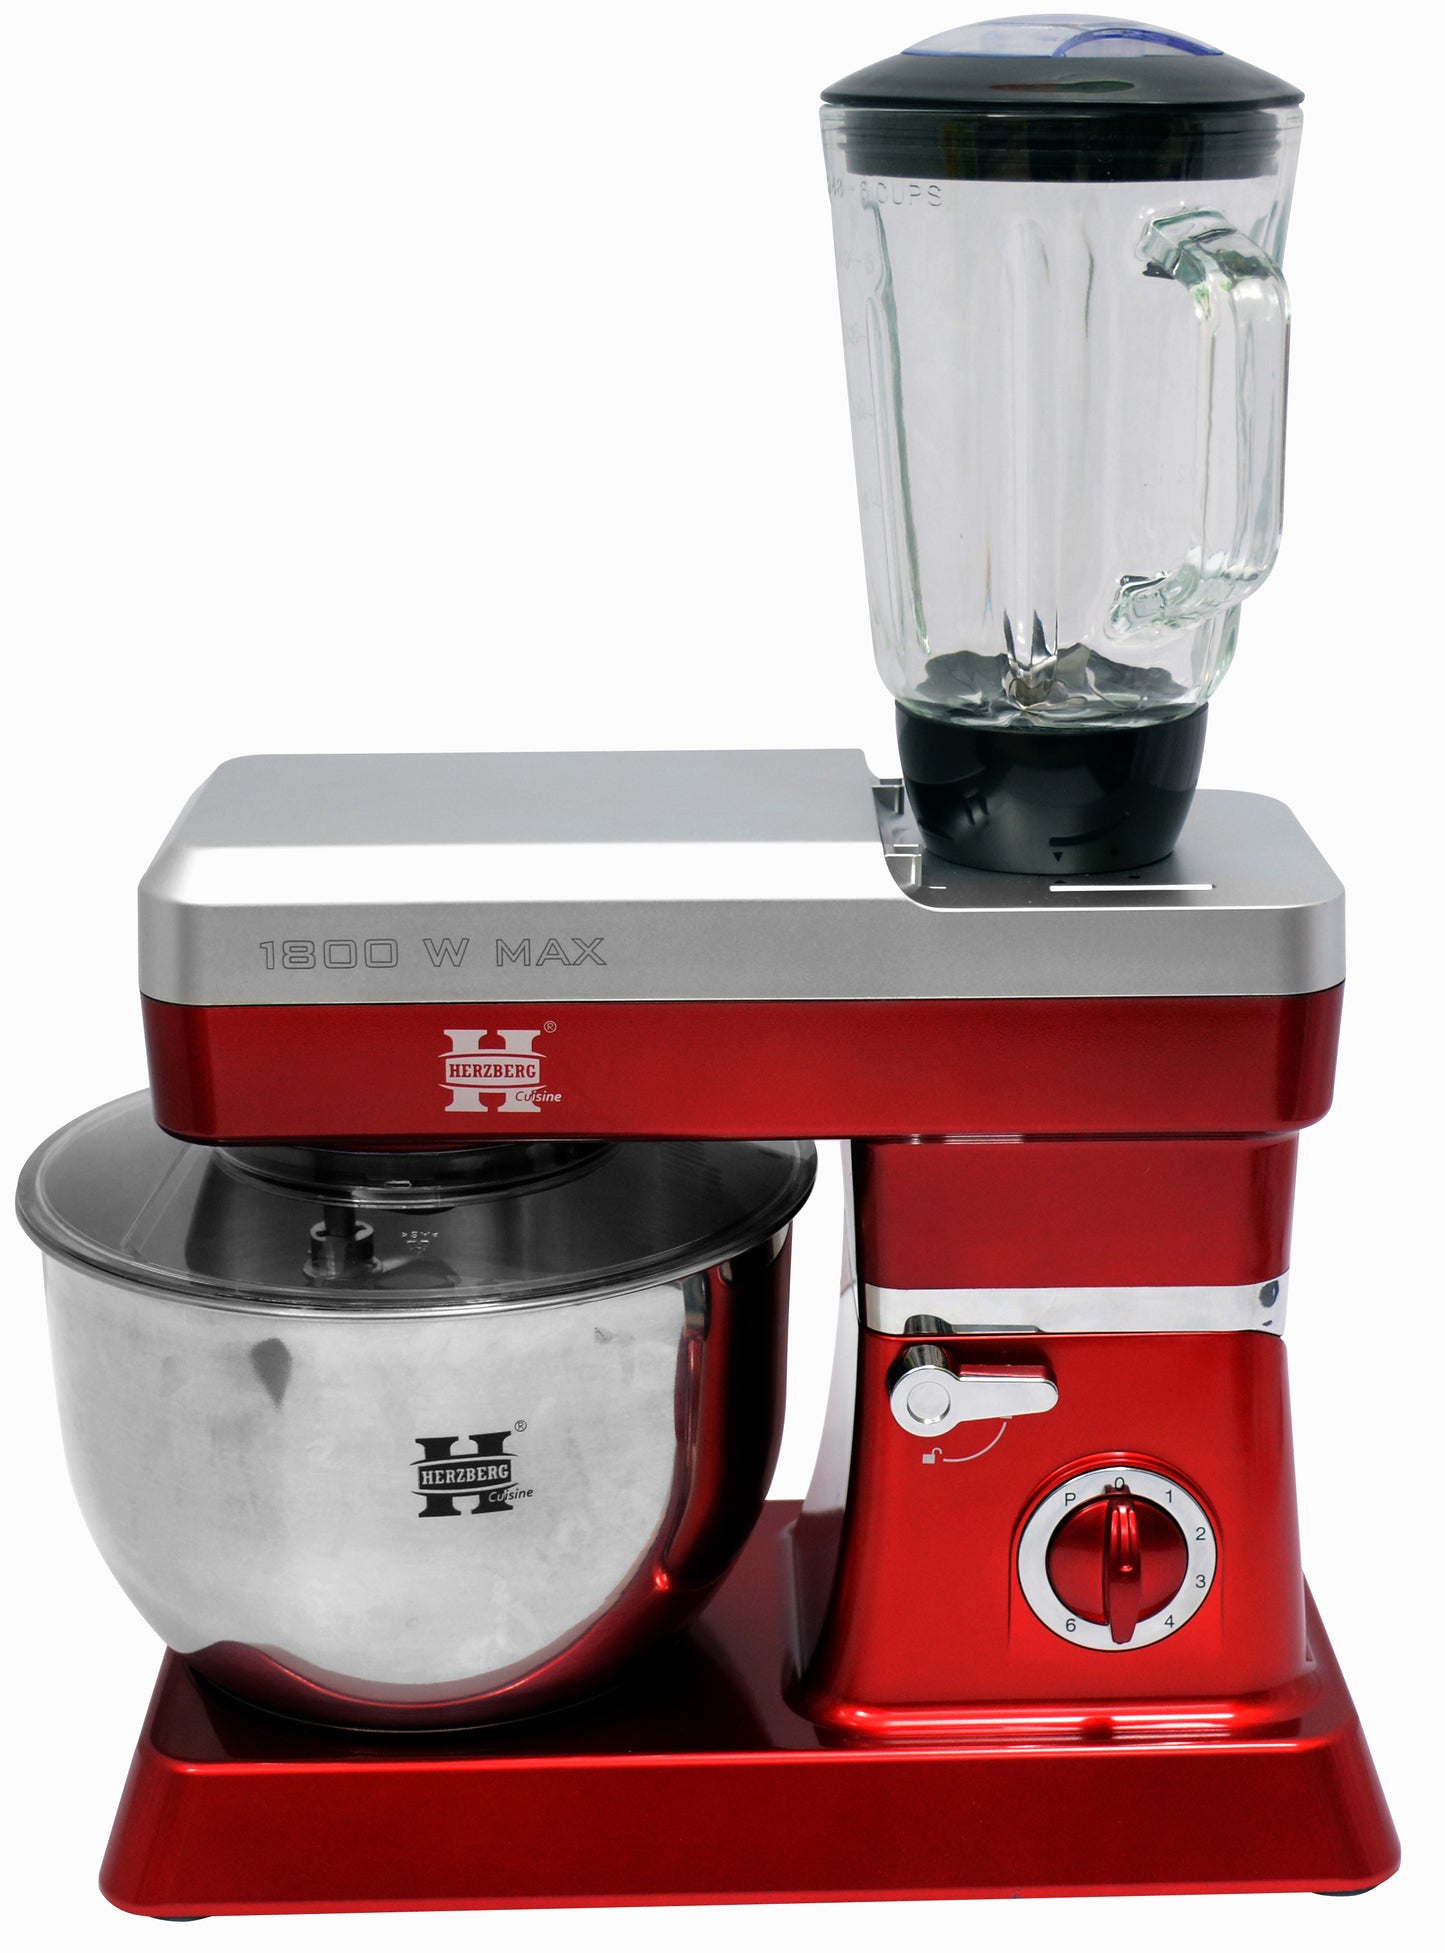 Herzberg Cooking Herzberg Hg-5065; Robot Mixeur 1800 W Max 6.5L Rood